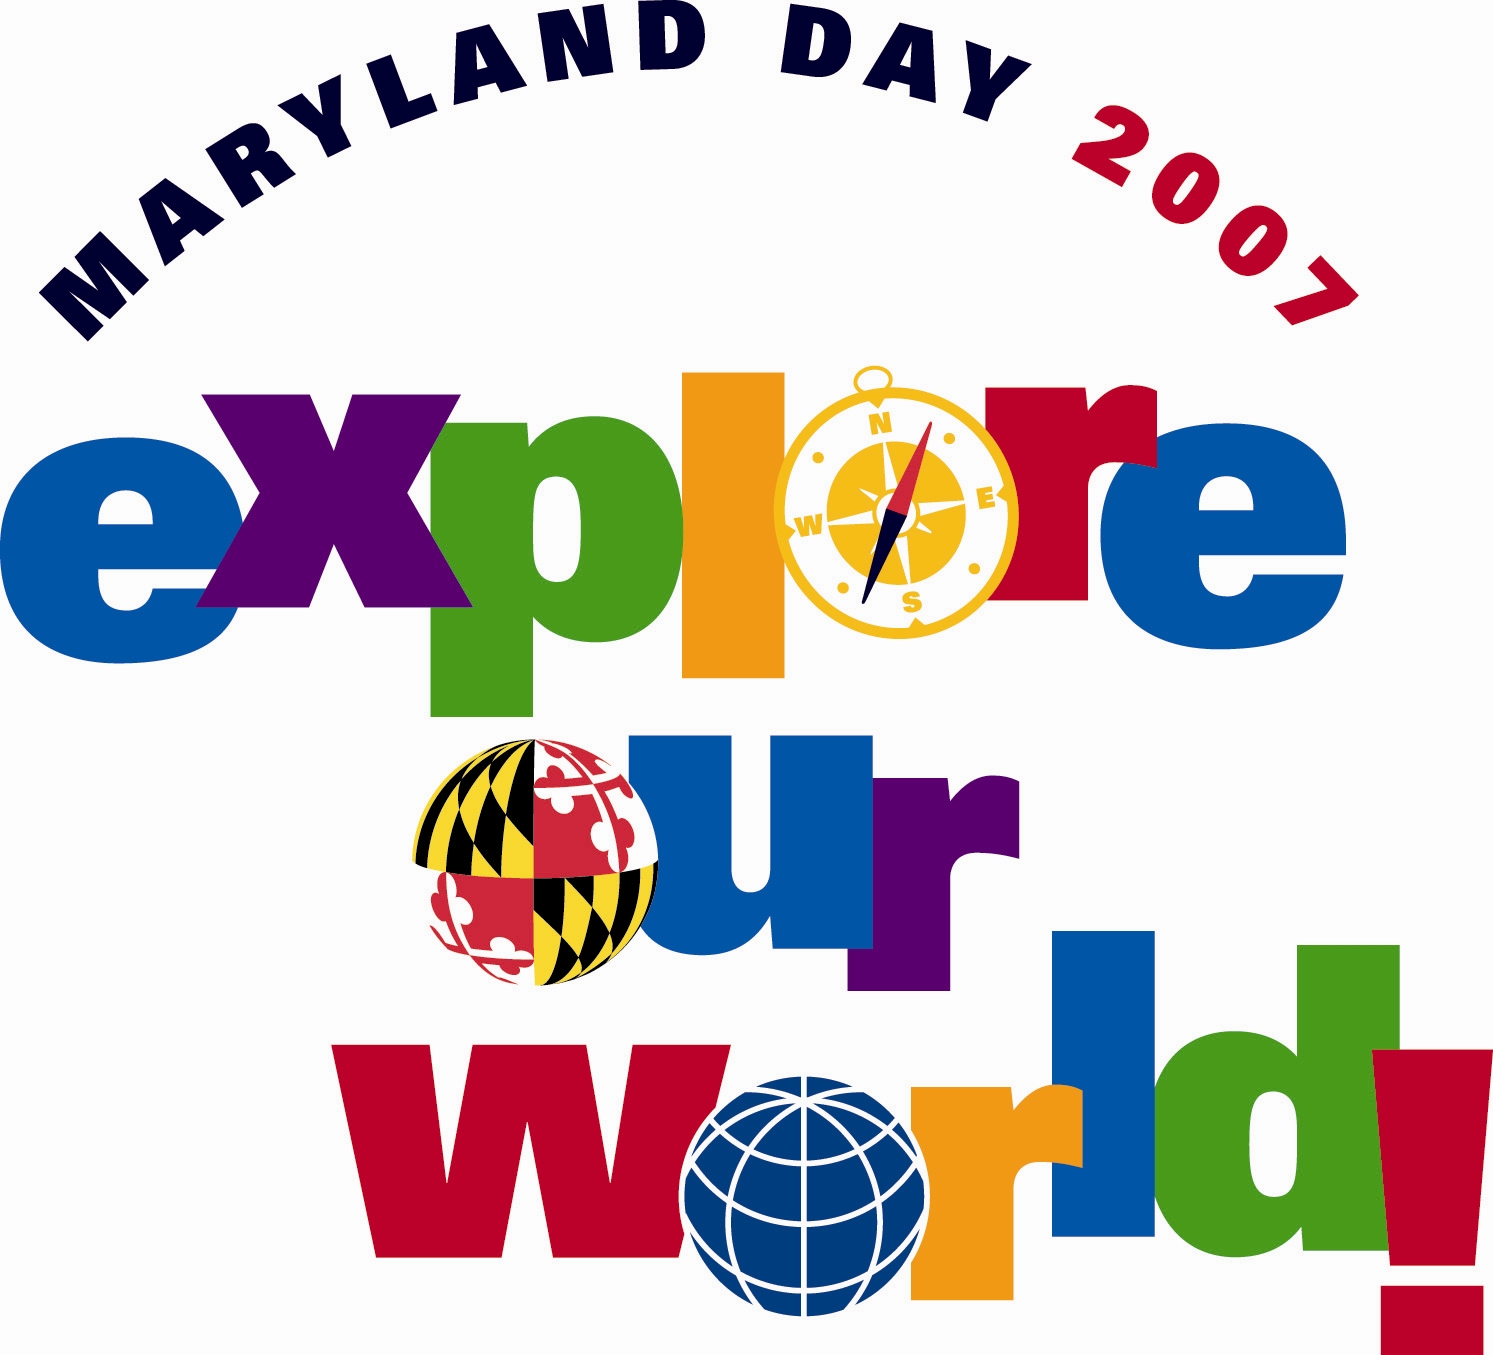 MD Day 2007 logo